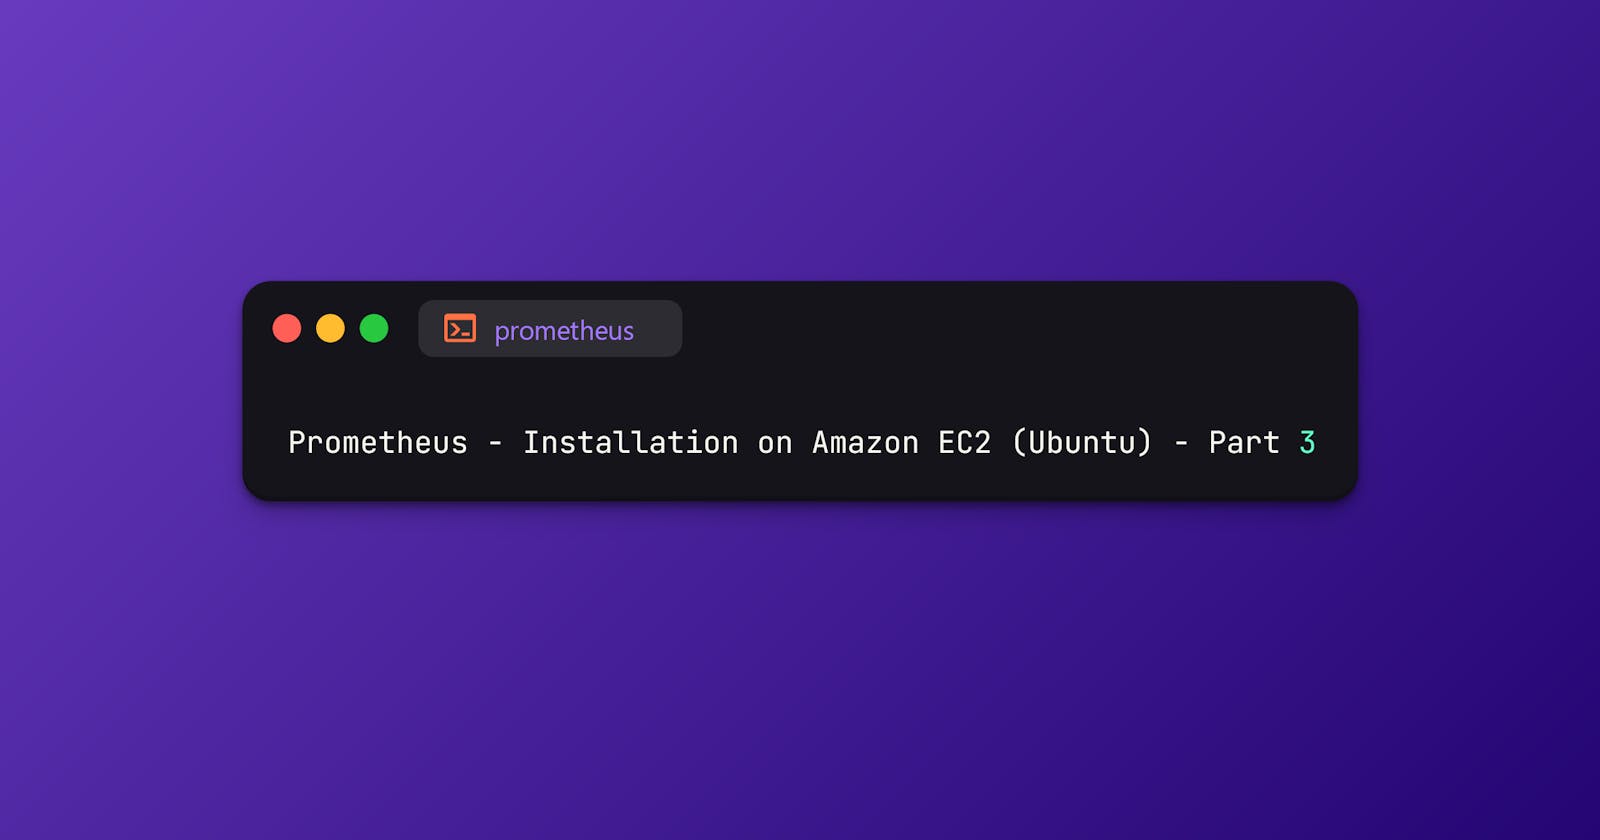 Prometheus - Installation on Amazon EC2 (Ubuntu) - Part 3